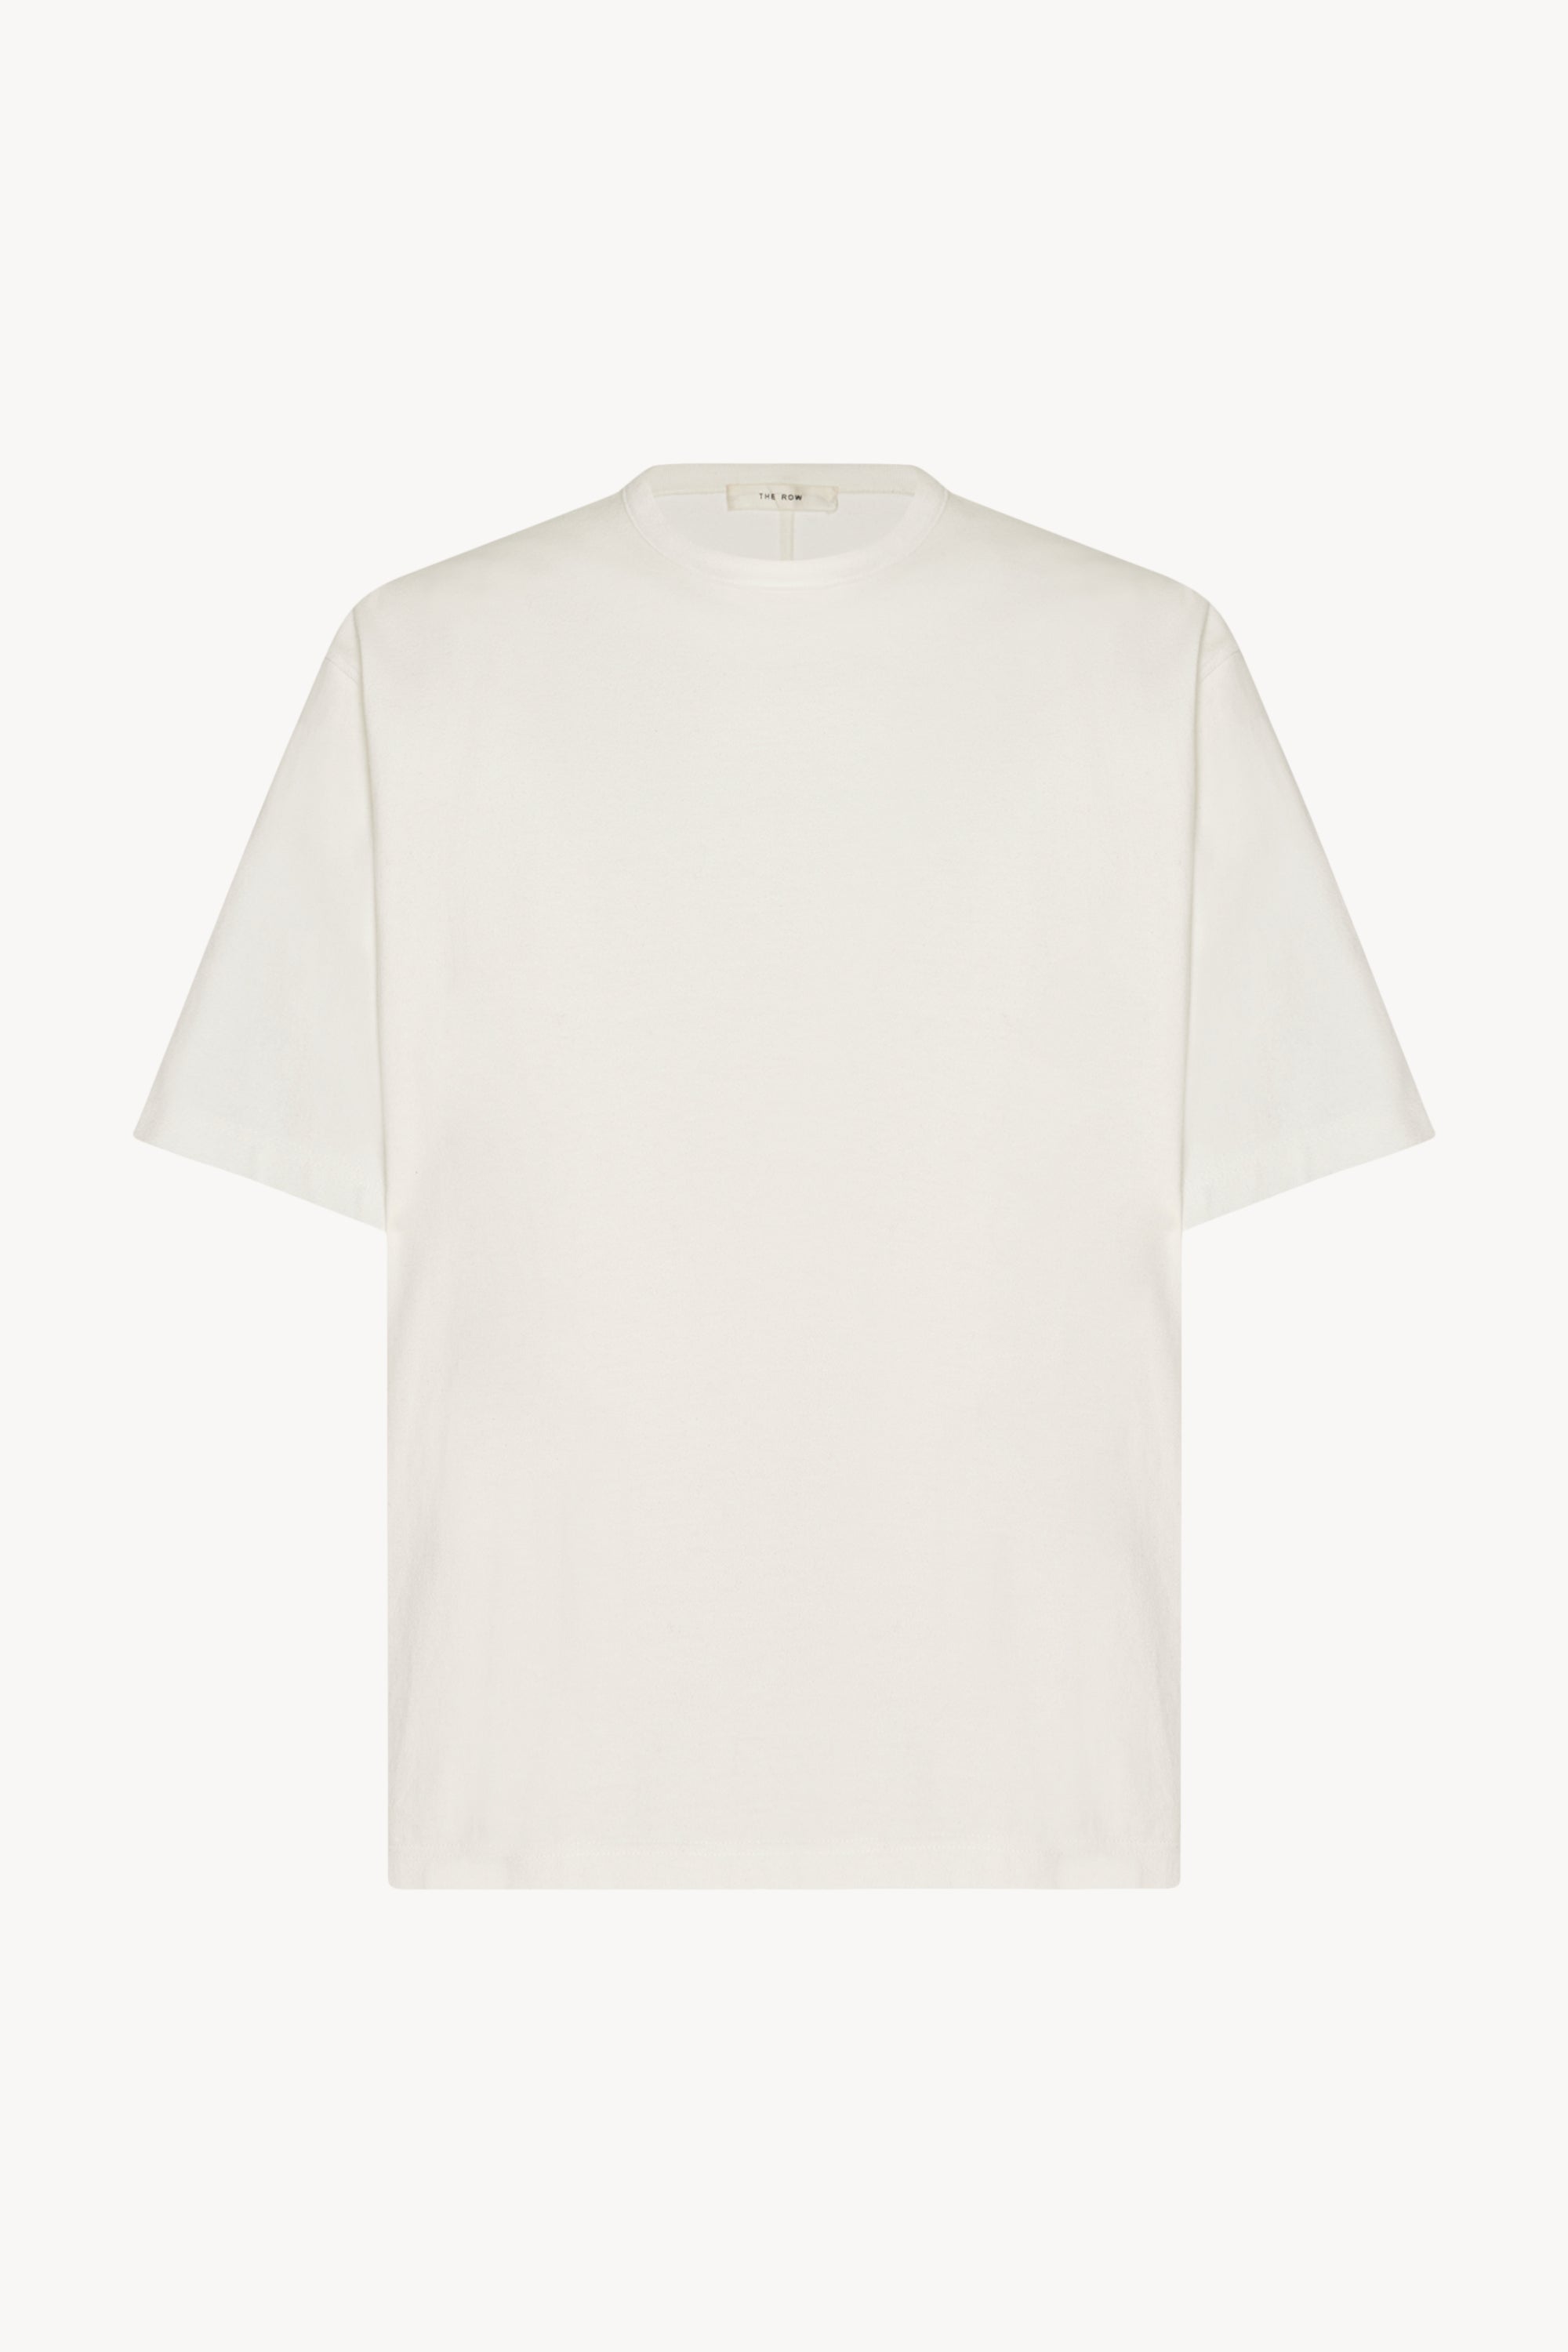 Men's T-shirts: Cotton & Cashmere Tees l The Row